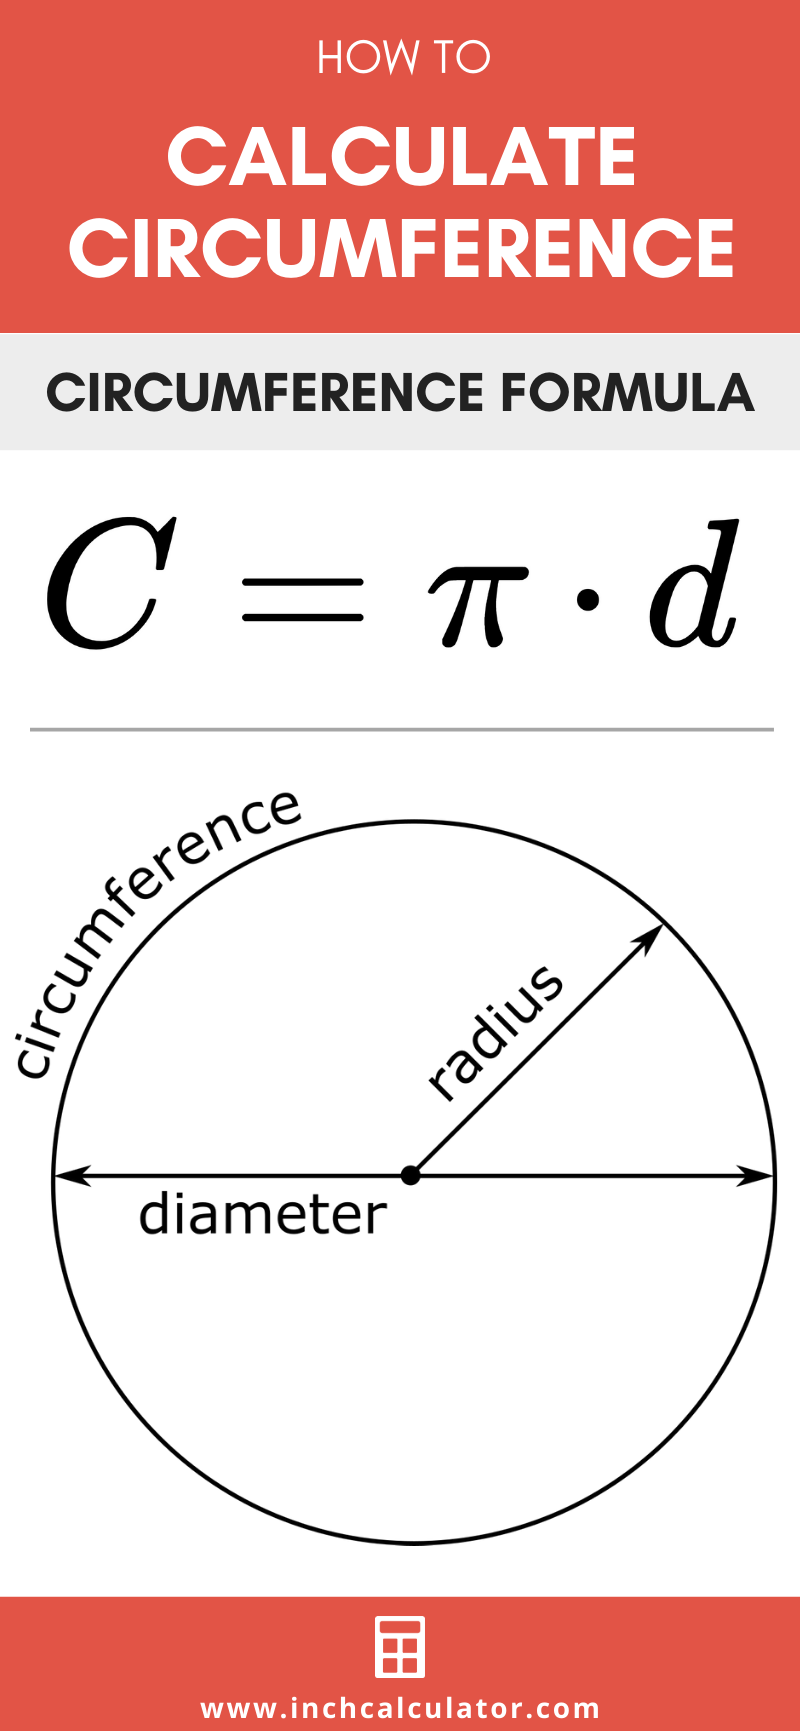 Share circumference calculator